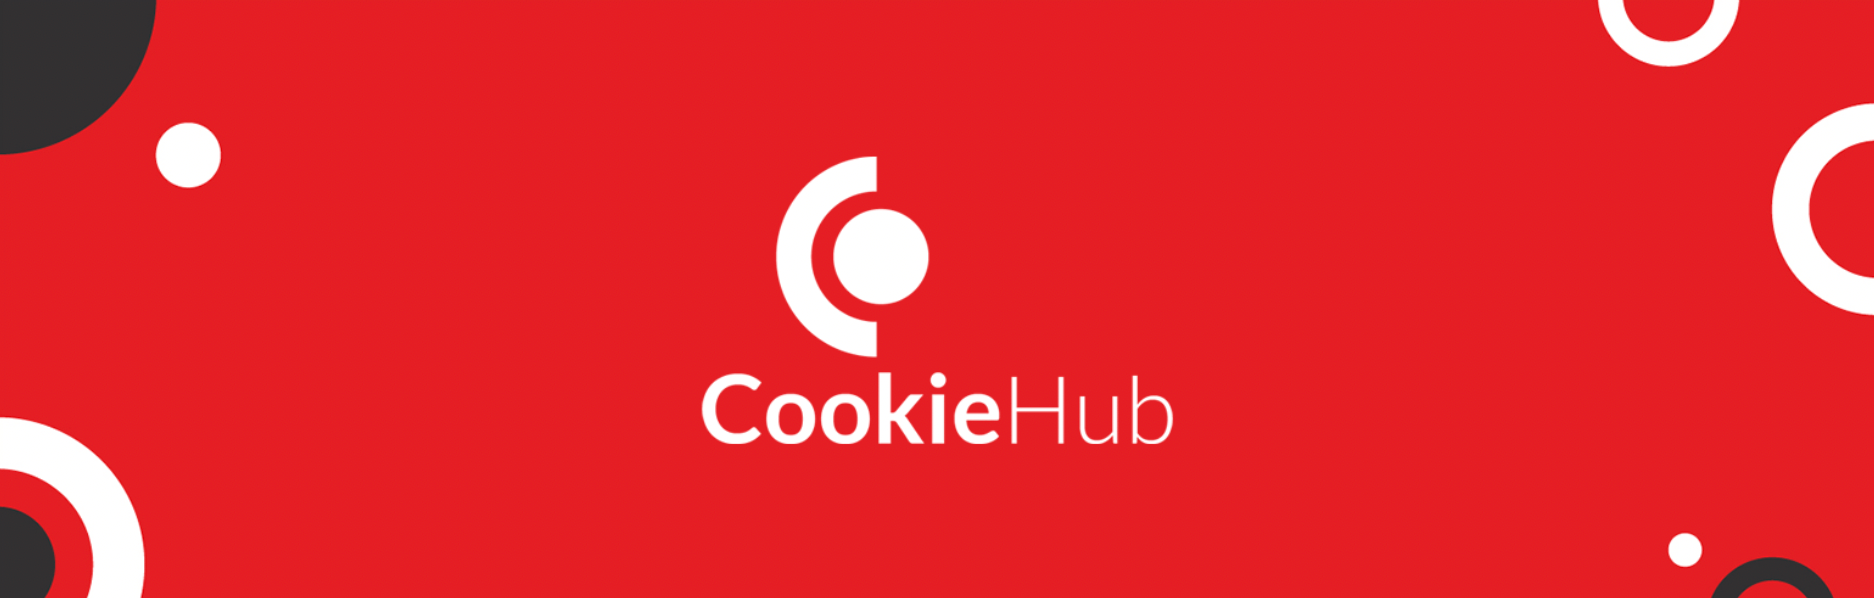 cookiehub - thumbnail